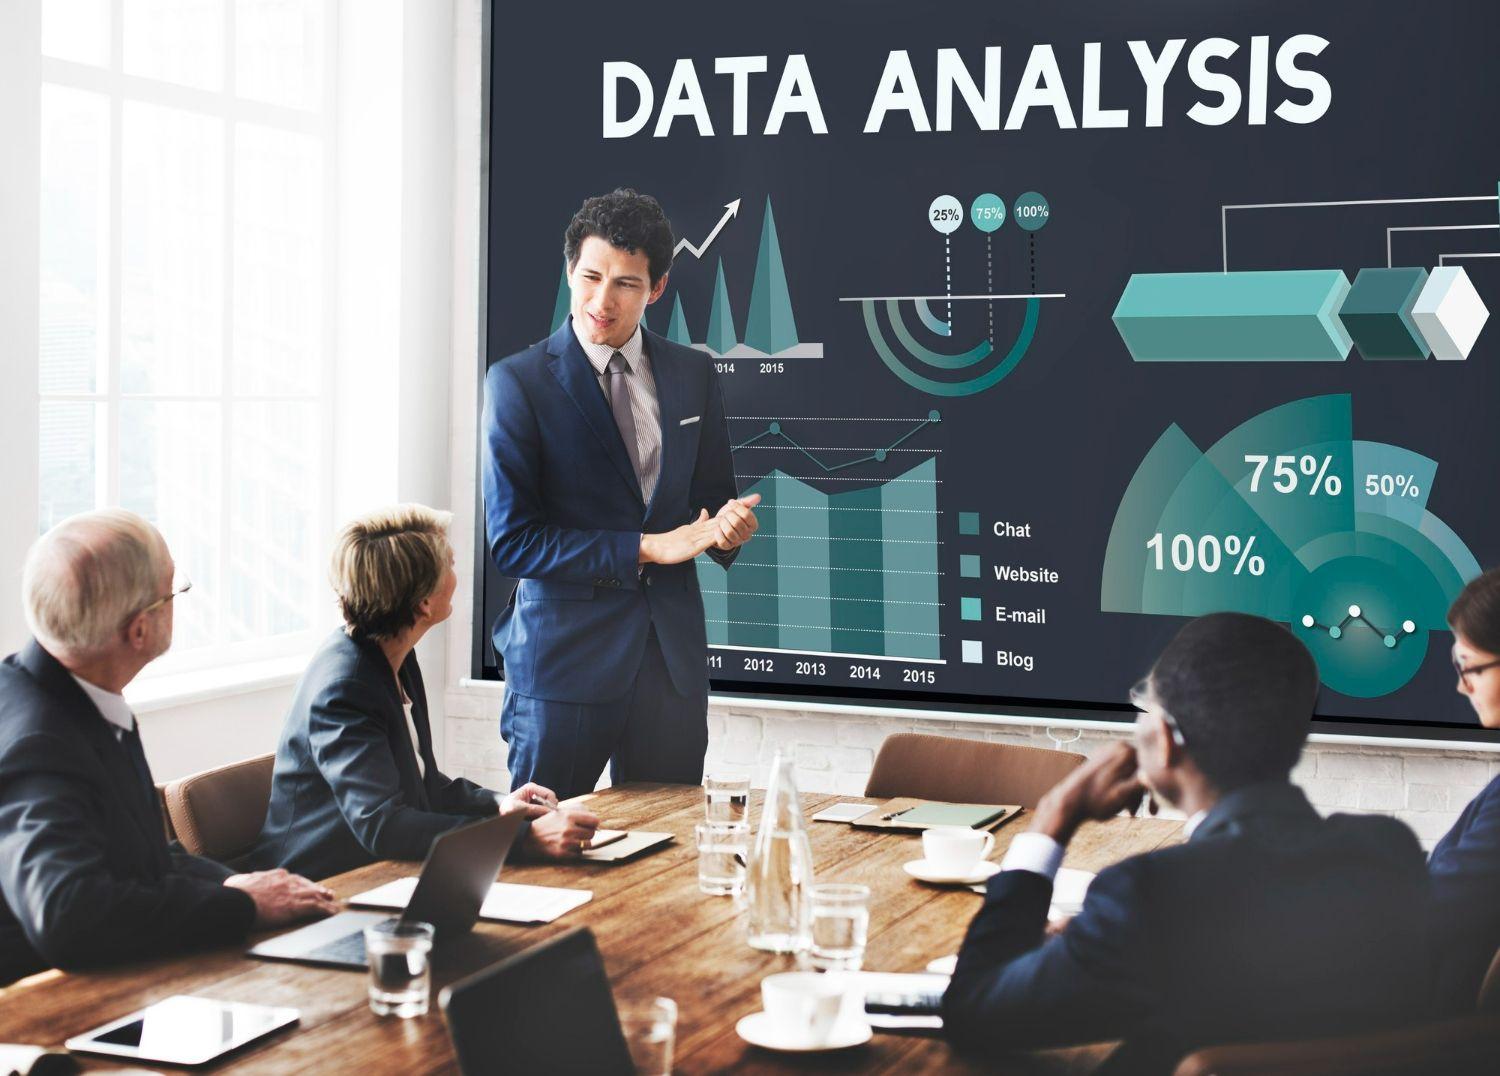 Data Analysis as a Service